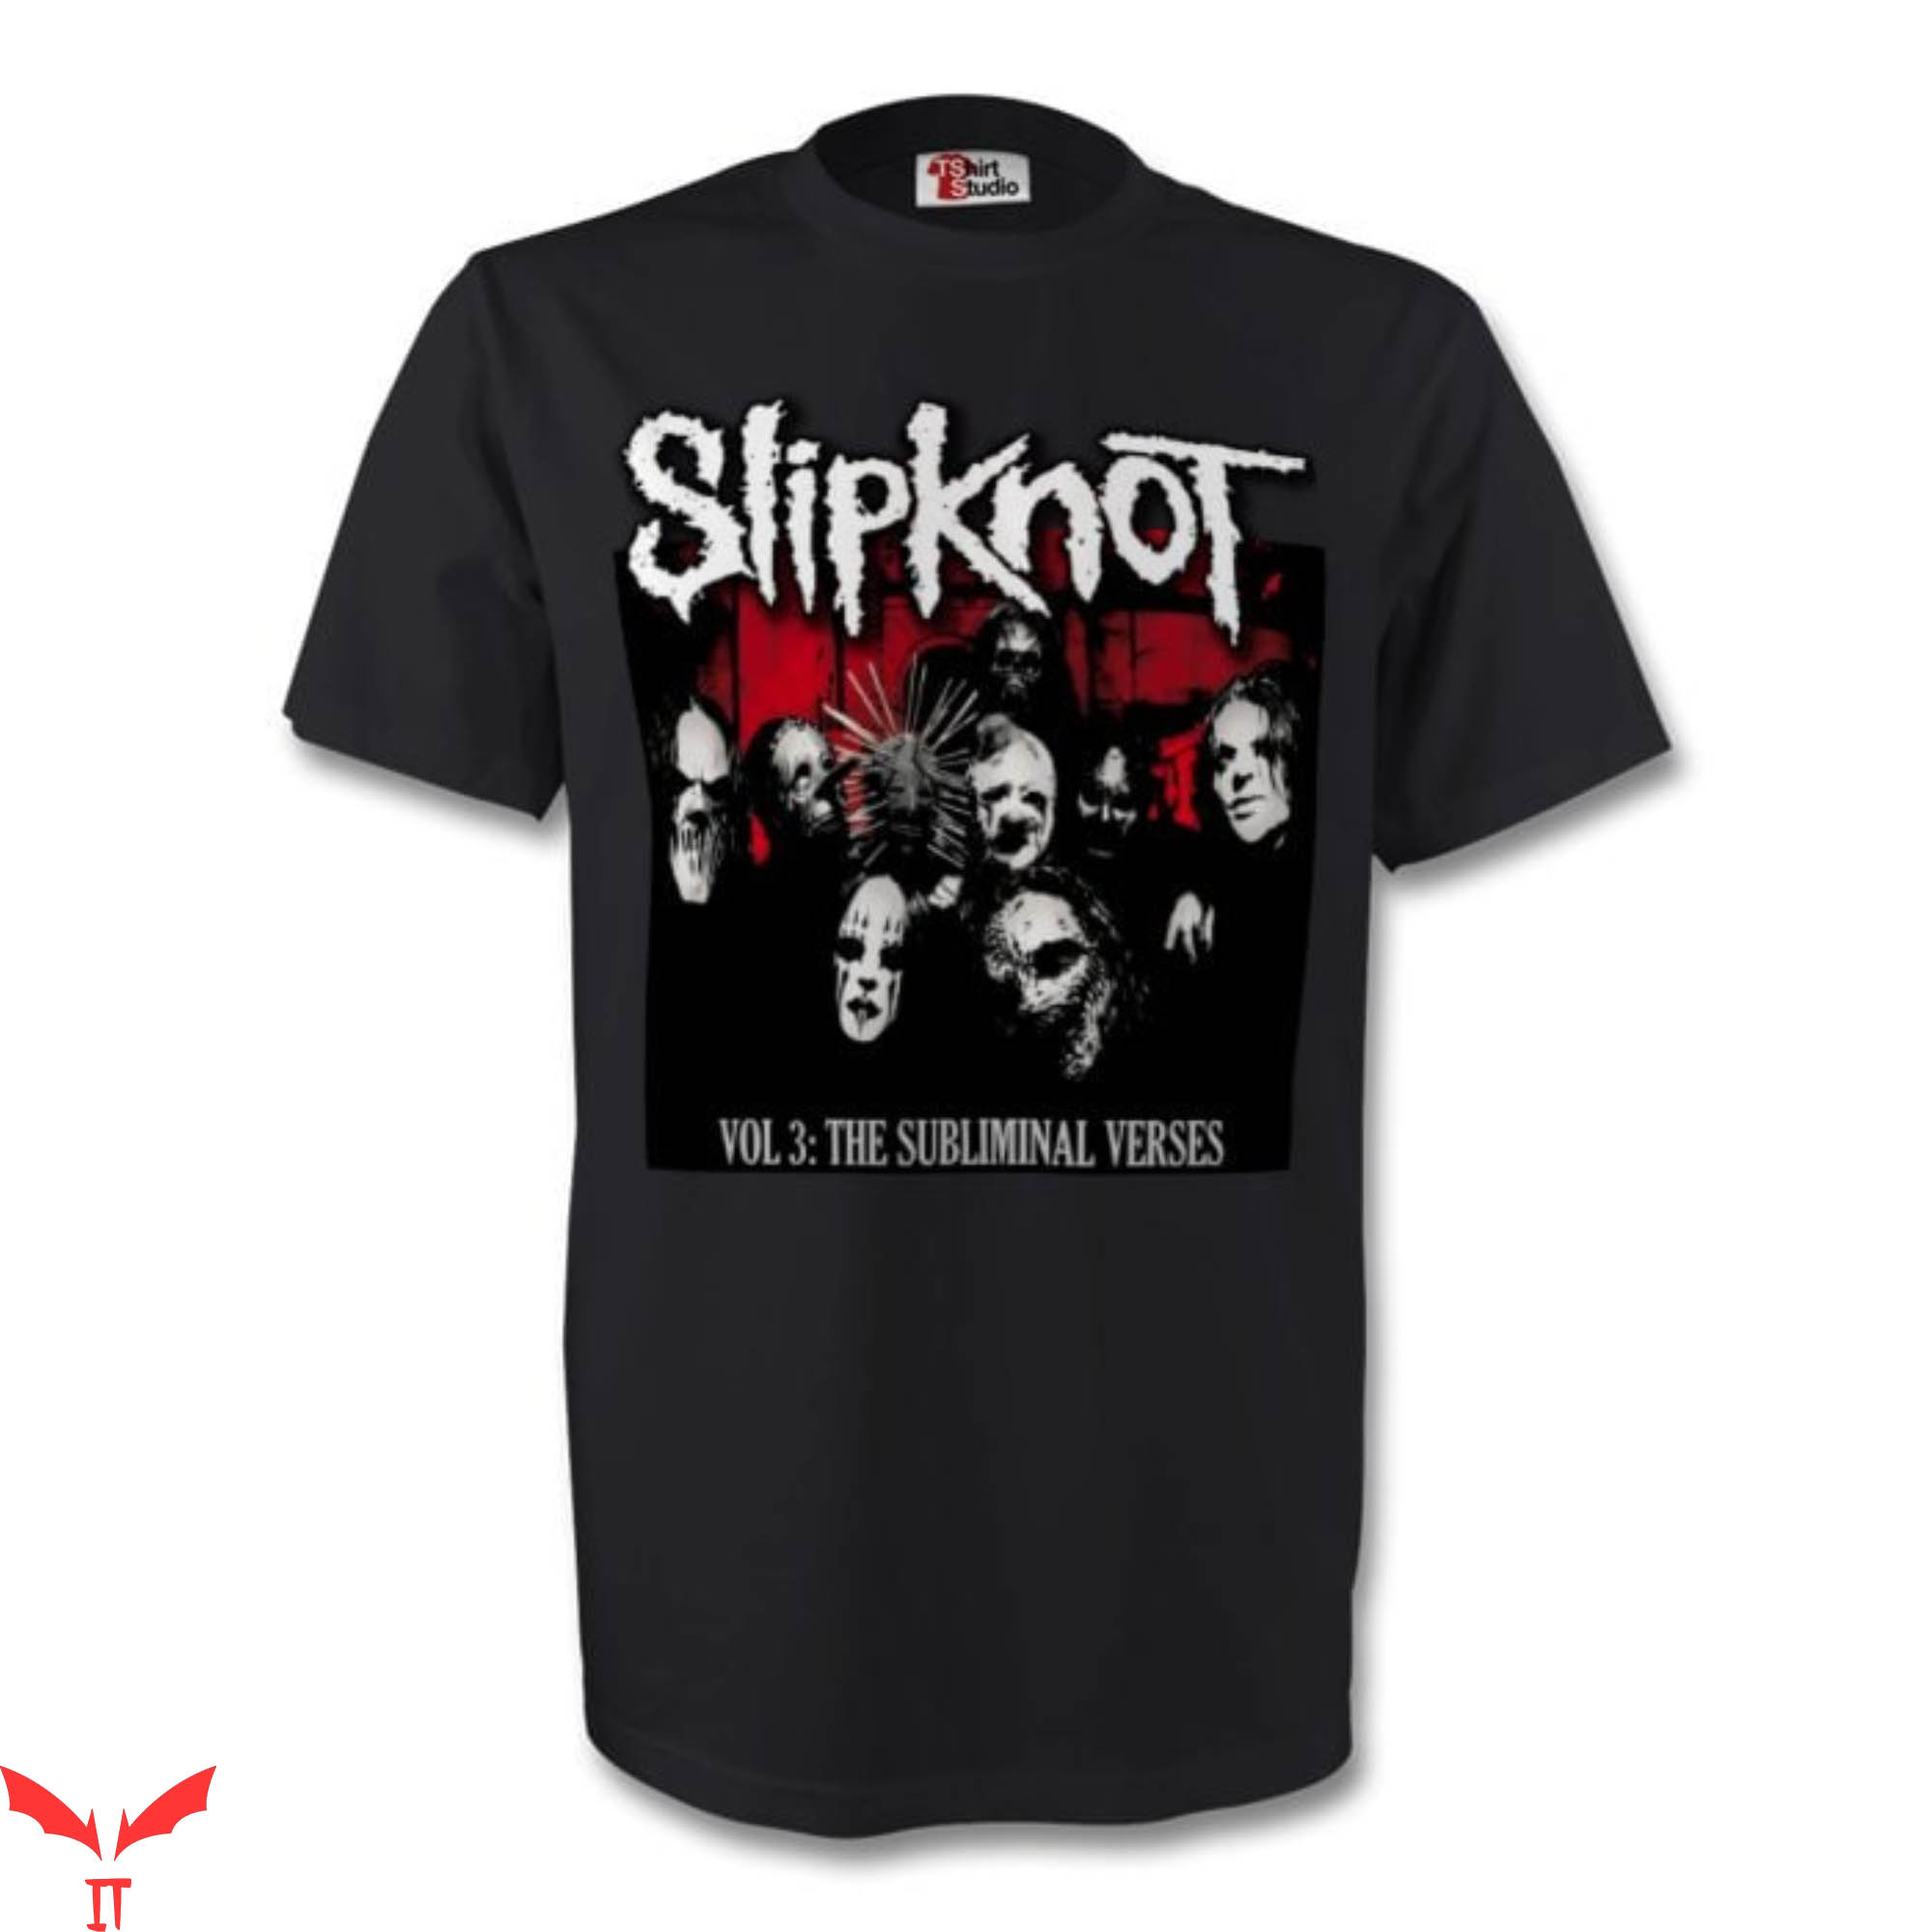 Slipknot All Hope Is Gone T-Shirt Vol 3 Subliminal Verses